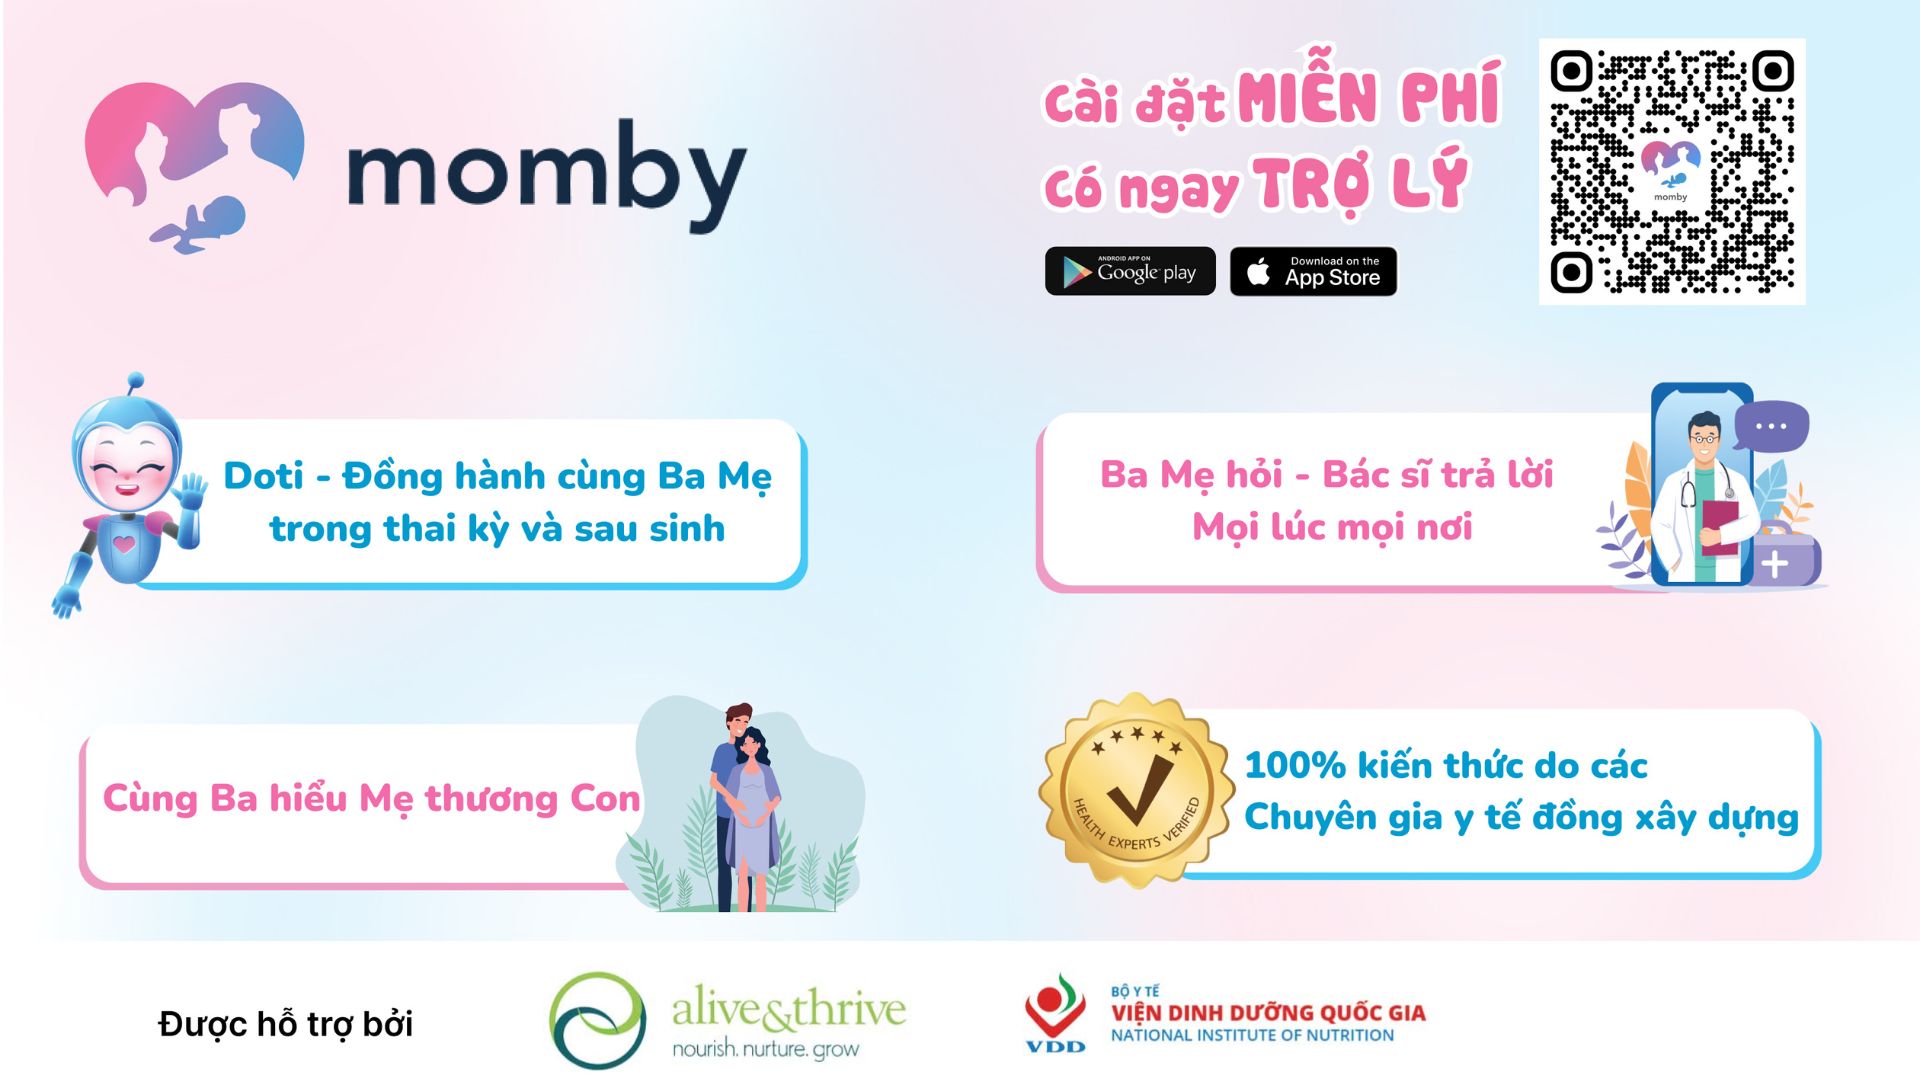 hinh-anh-thanh-cong-cua-momby-tai-chuong-trinh-google-for-startups-vietnam-2022-441-3